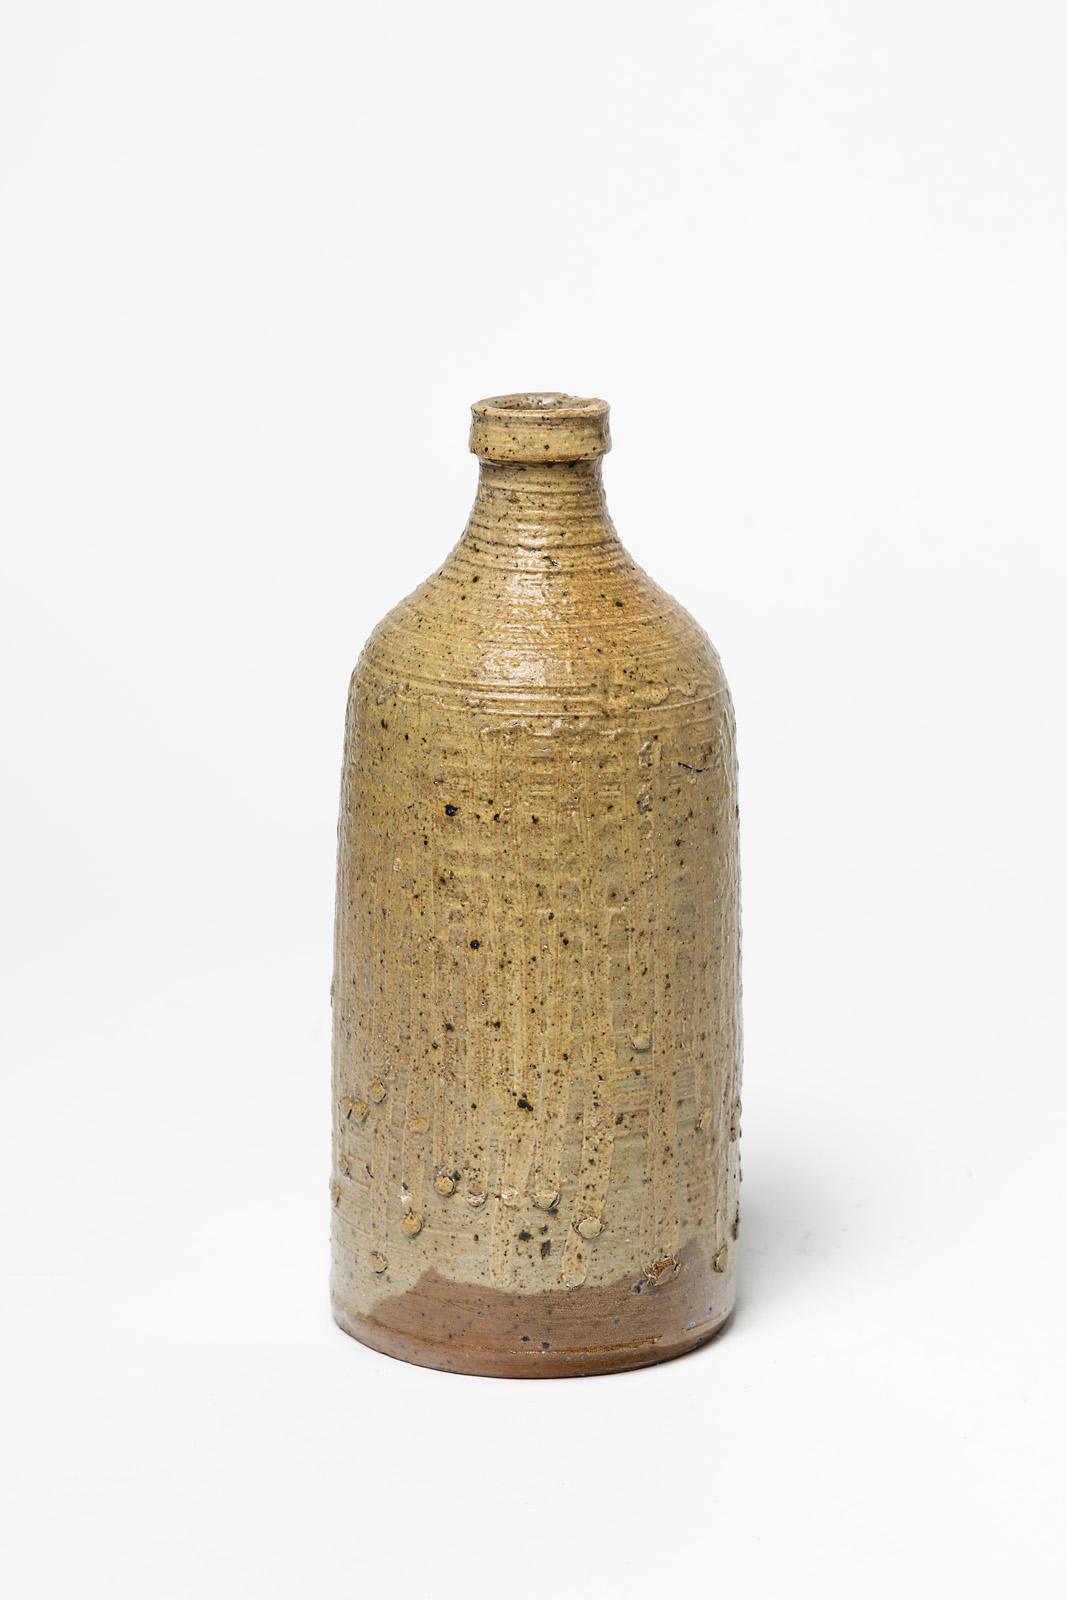 La Borne

Original and decorative 20th century ceramic bottle or vase

Signed under the base

Elegant brown ceramic glaze color 

Original perfect condition

Measures: Height: 23 cm, large: 9 cm.